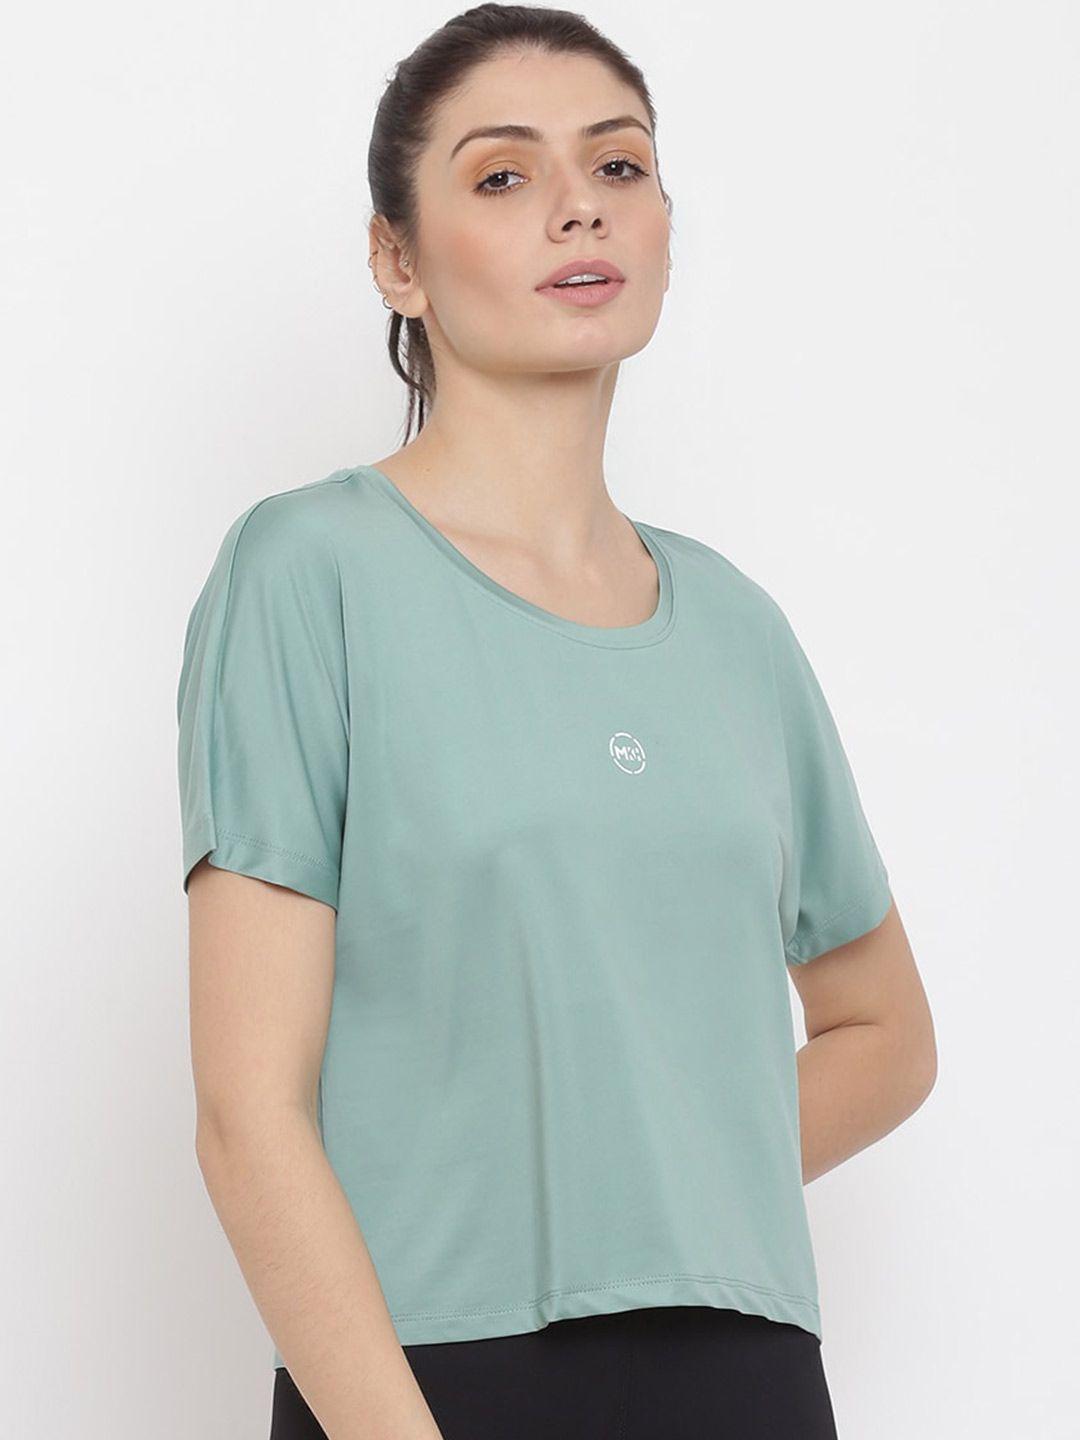 mkh women sage green extended sleeves dri-fit running t-shirt